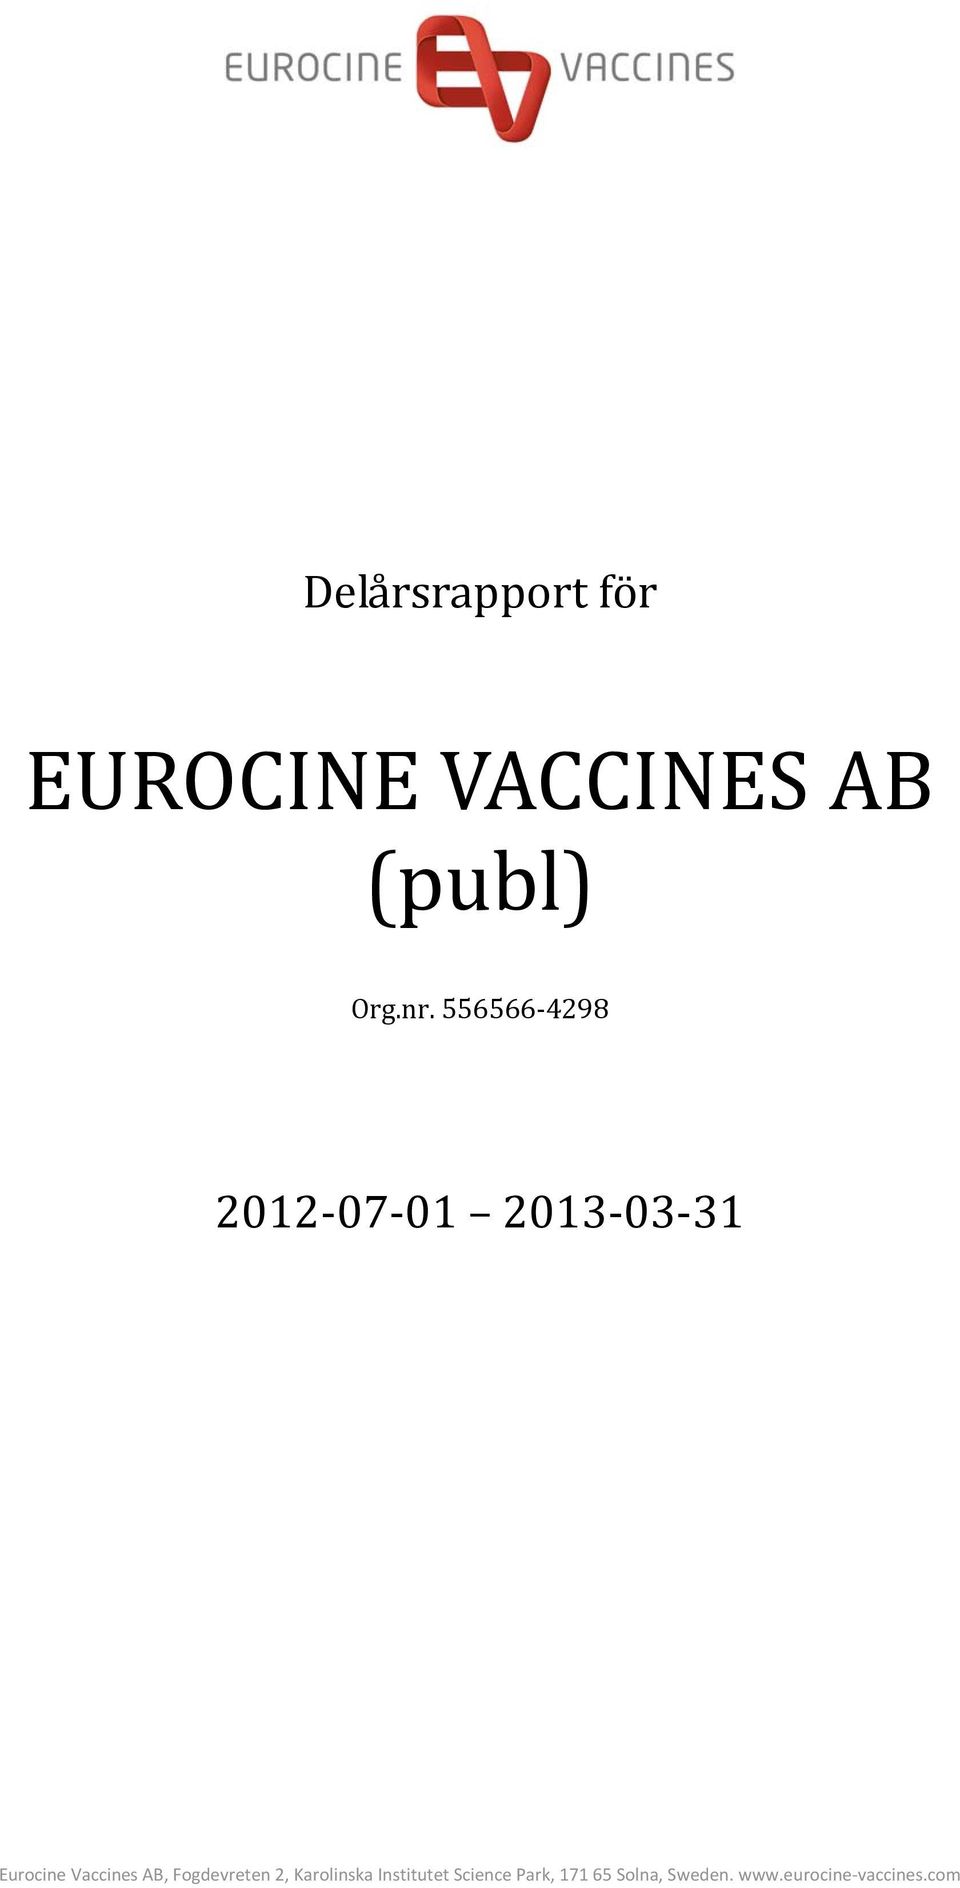 Vaccines AB, Fogdevreten 2, Karolinska Institutet